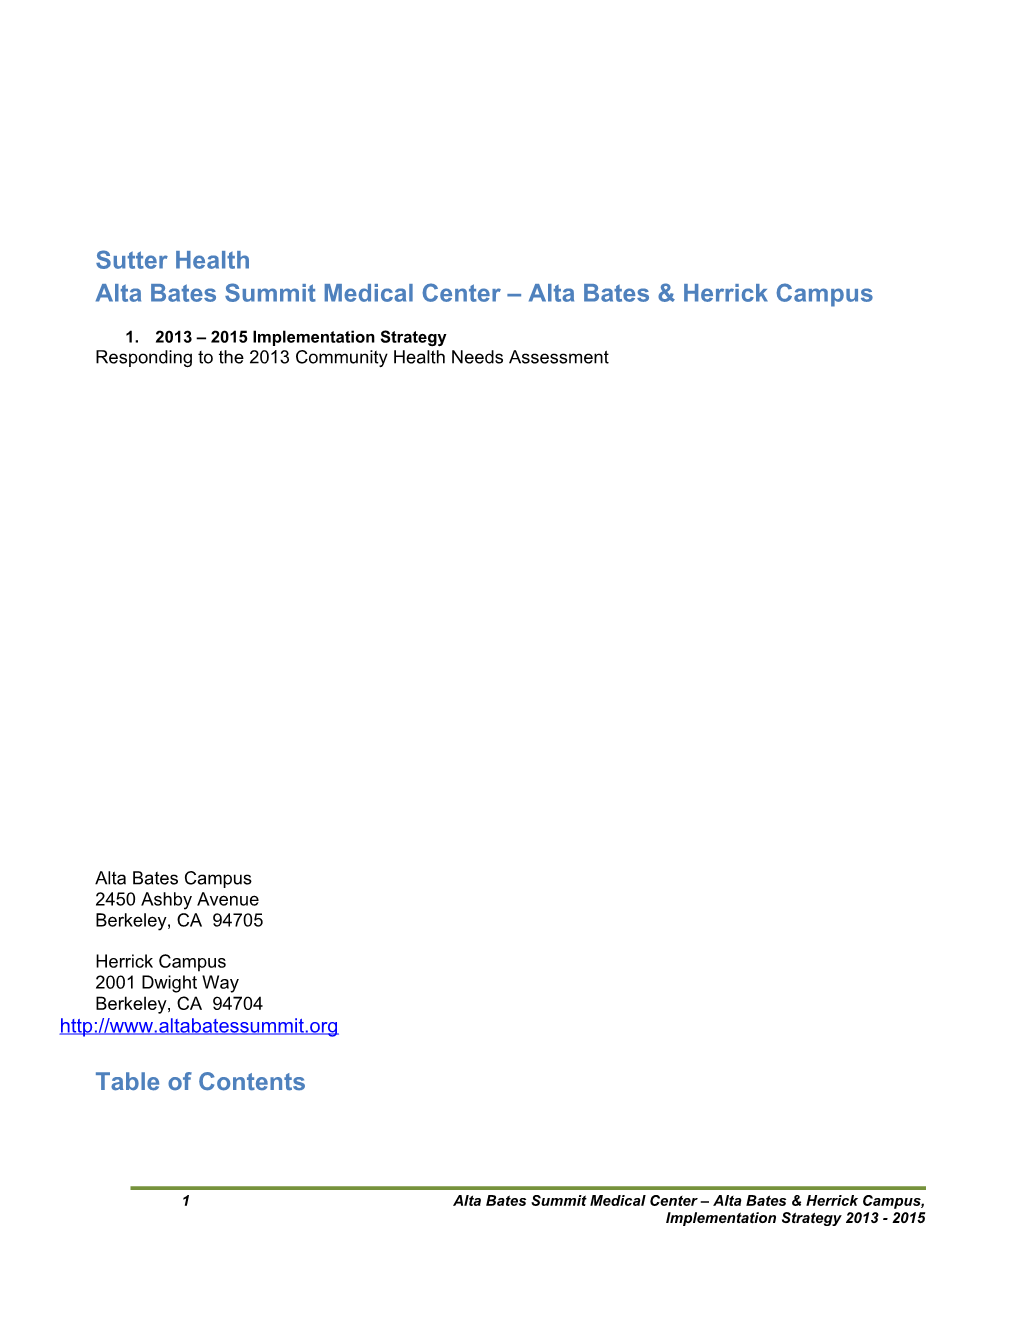 Sutter Health Alta Bates Summit Medical Center Alta Bates & Herrick Campus 2013-2015